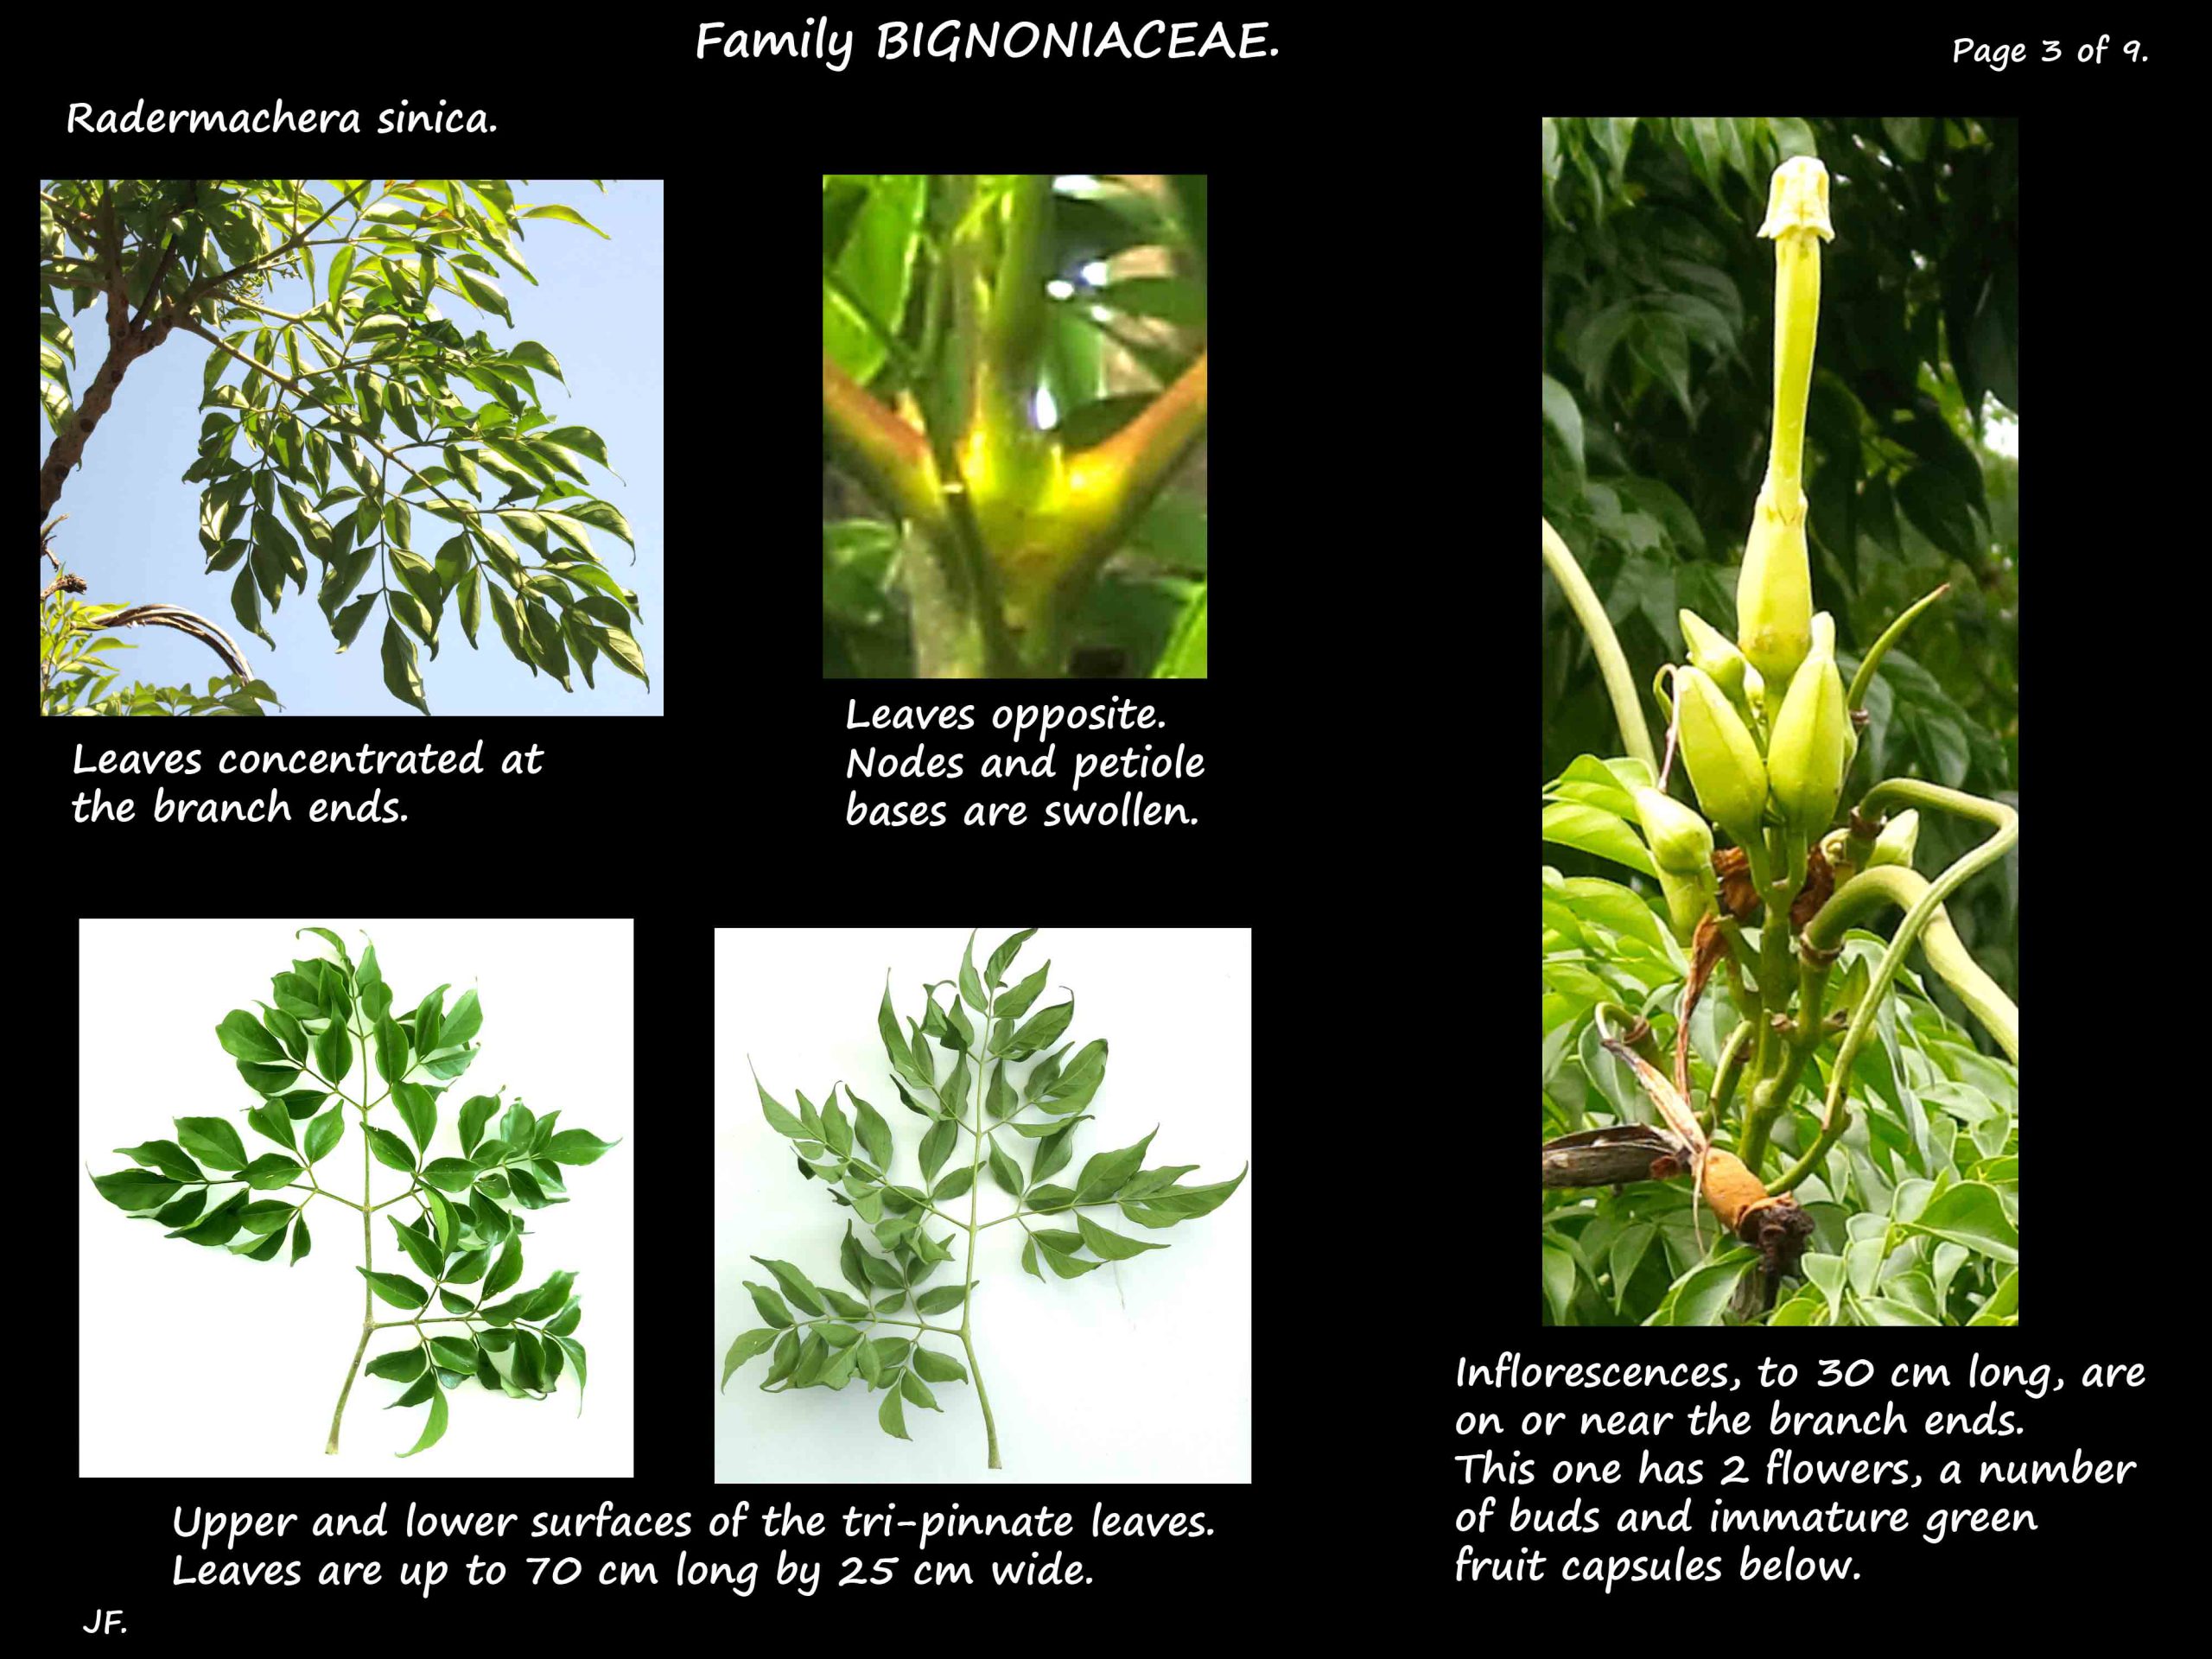 3 Radermachera sinica leaves